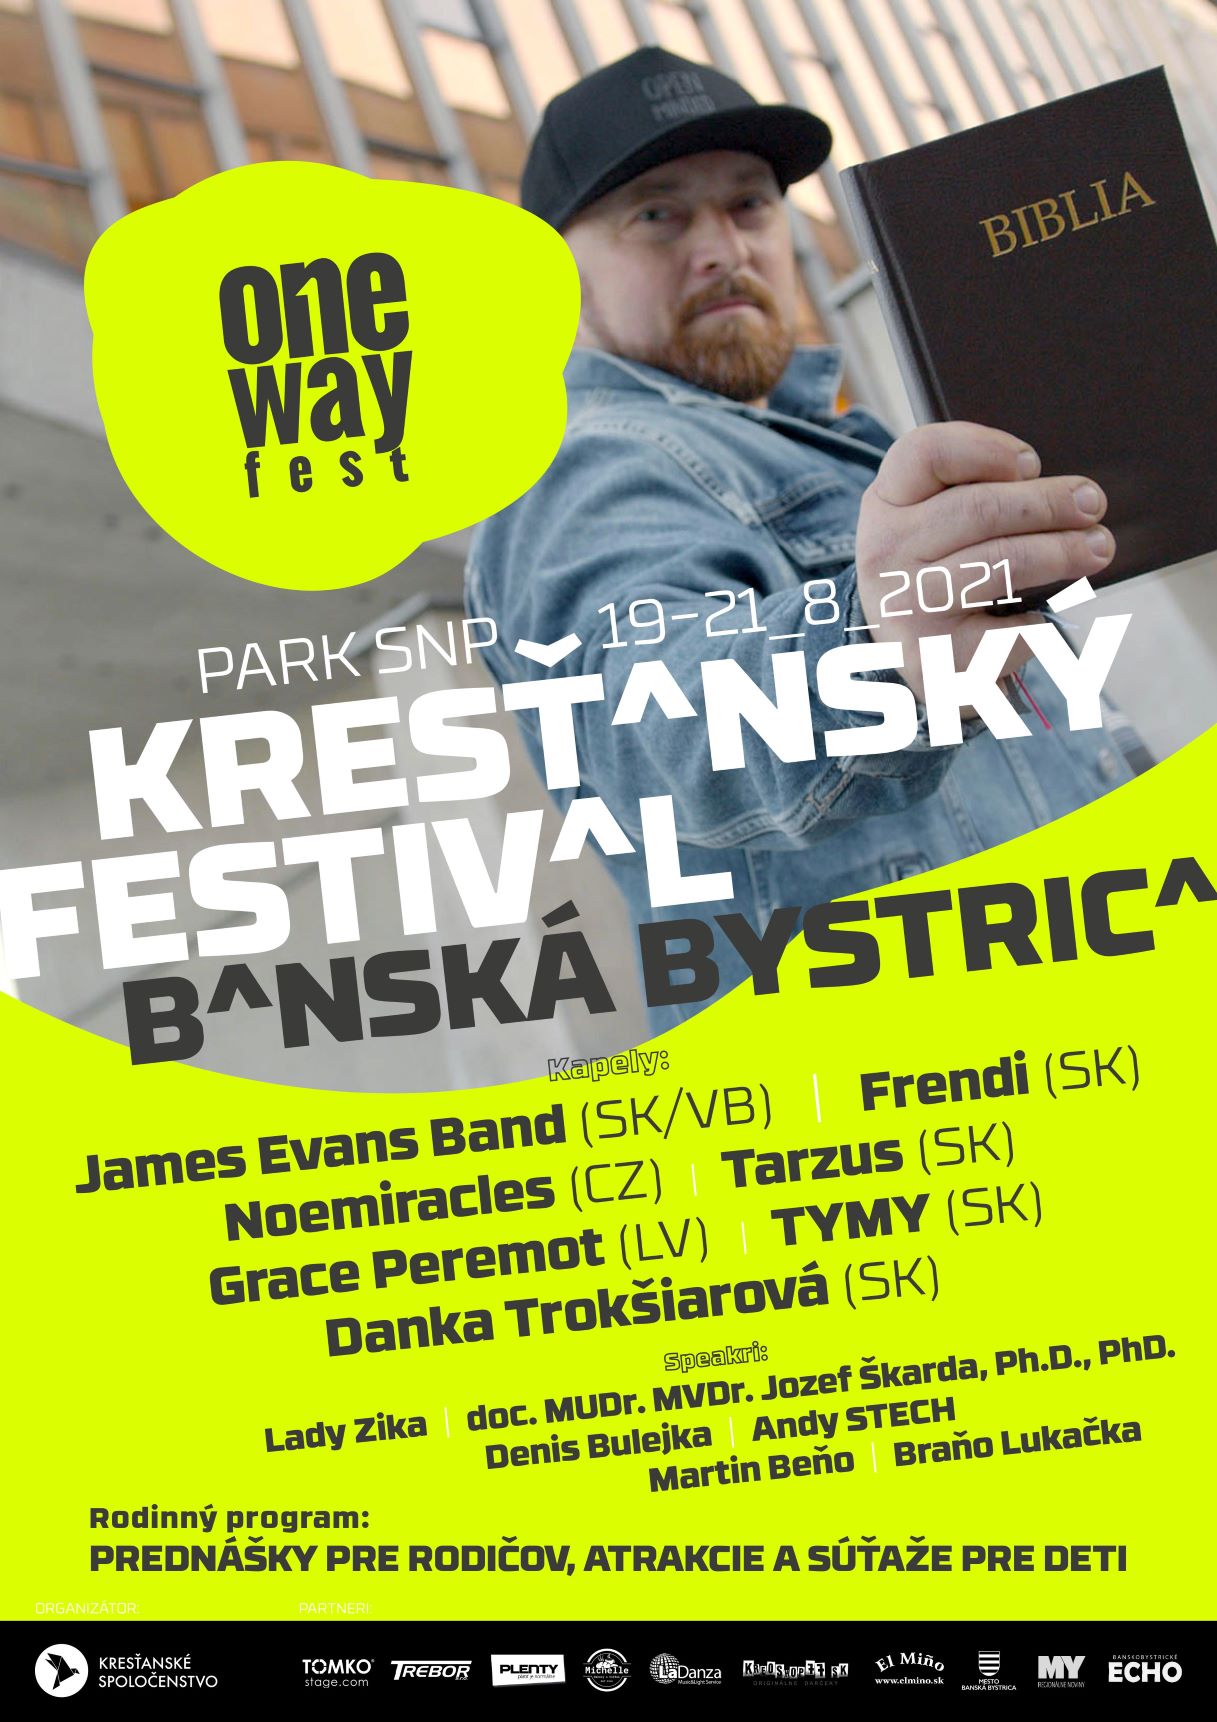 One Way Fest 2021 Bansk Bystrica